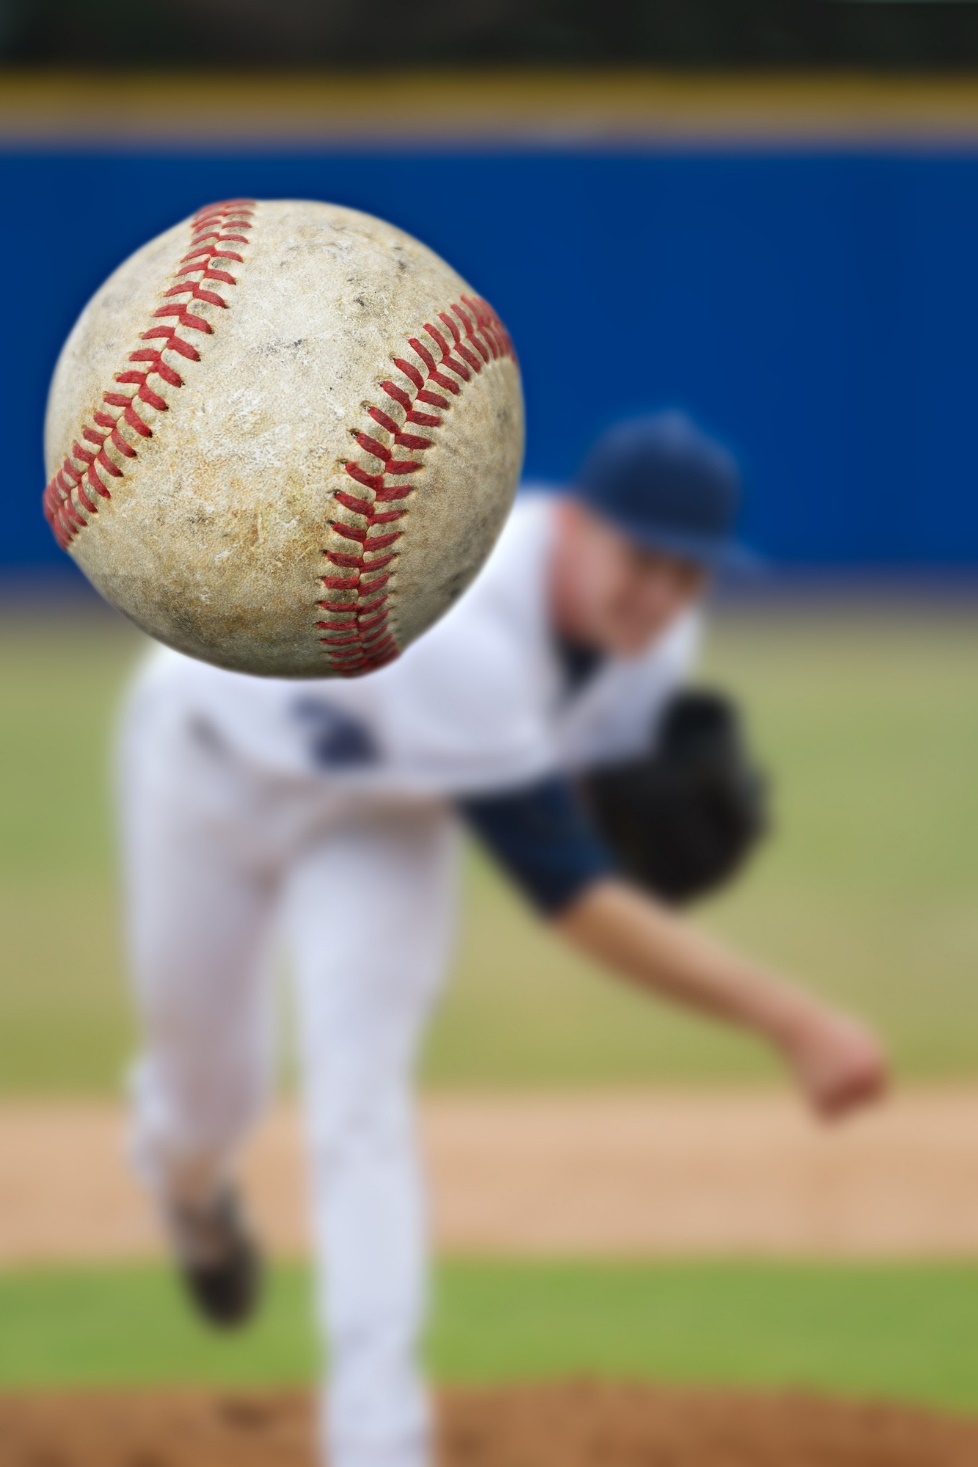 A baseball player throwing a baseball

Description automatically generated